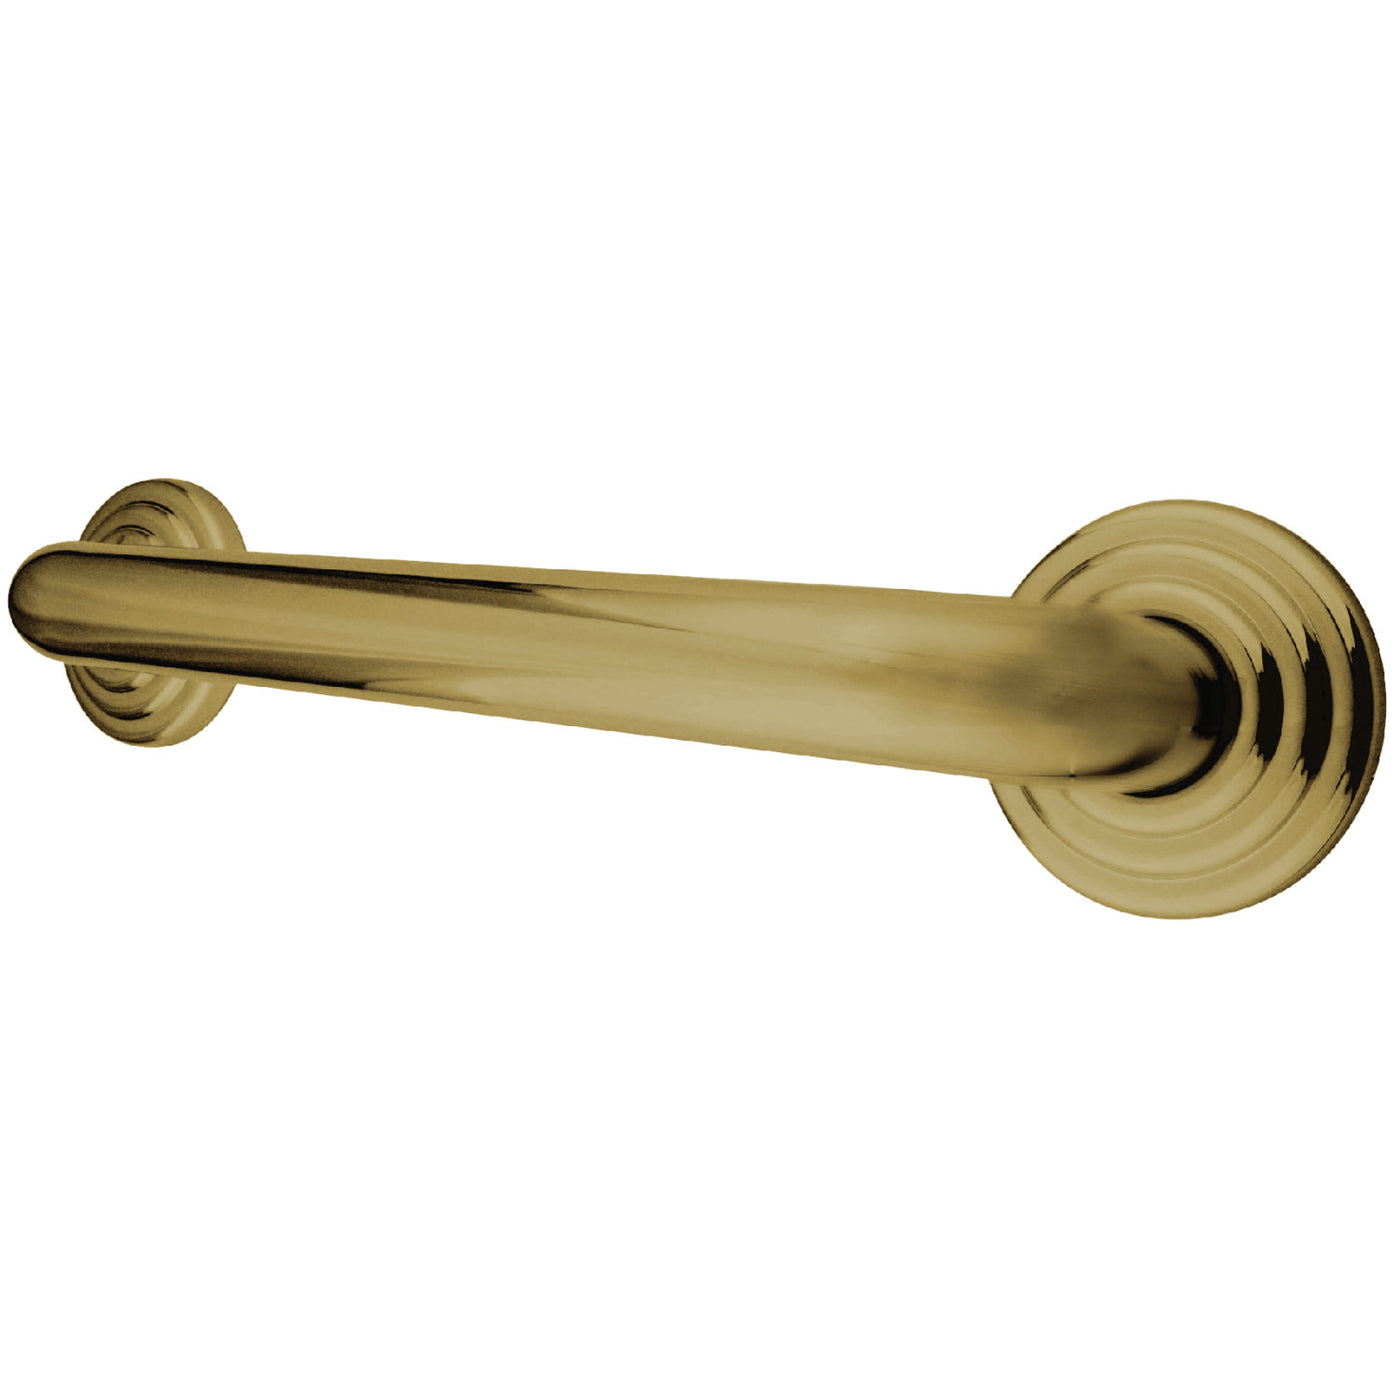 Elements of Design EDR314362 36-Inch X 1-1/4-Inch OD Grab Bar, Polished Brass